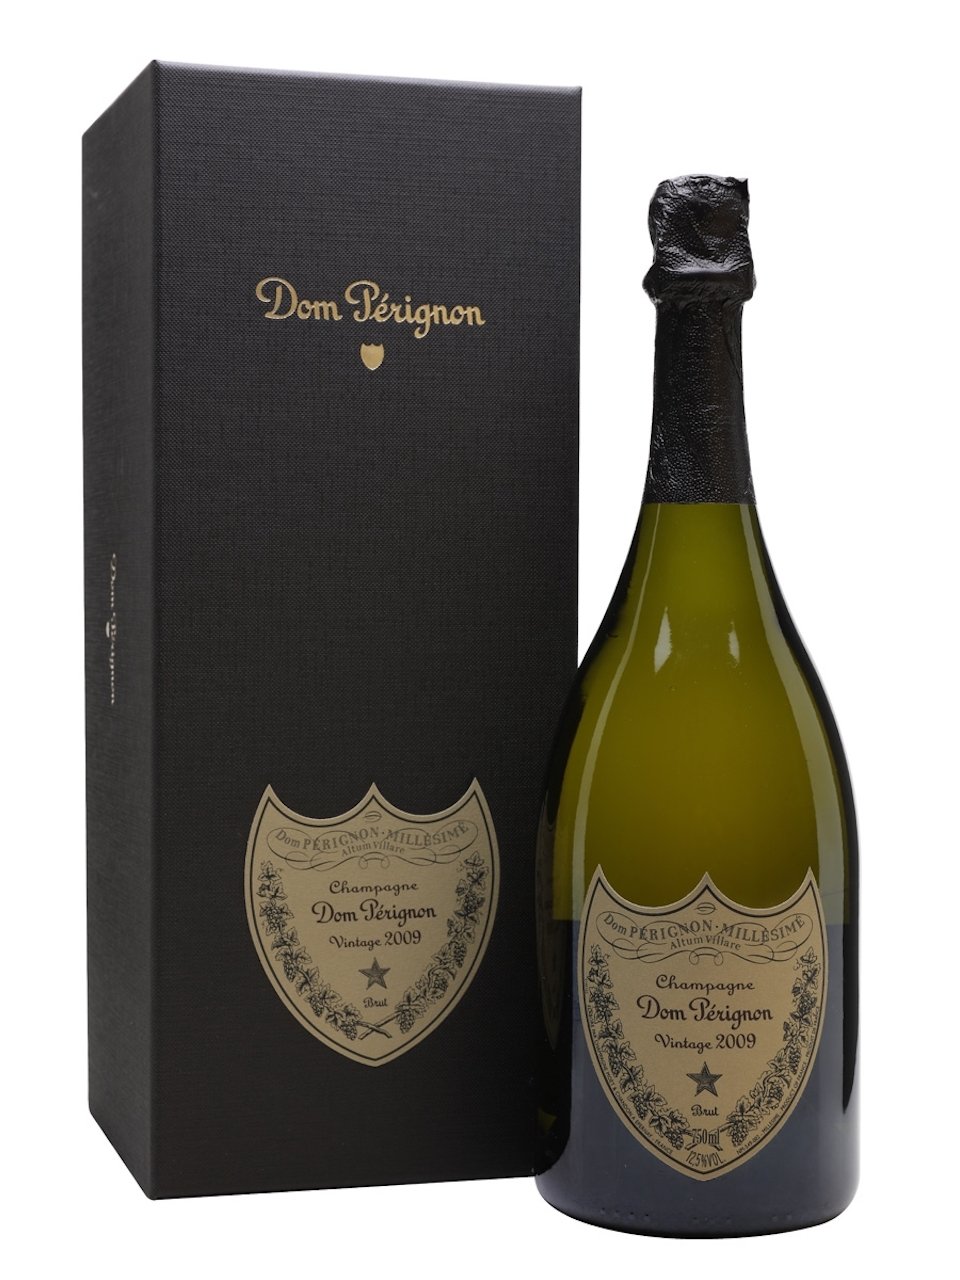 Vintage Dom Pérignon Champagne AOC find best price and buy online at 261.51€